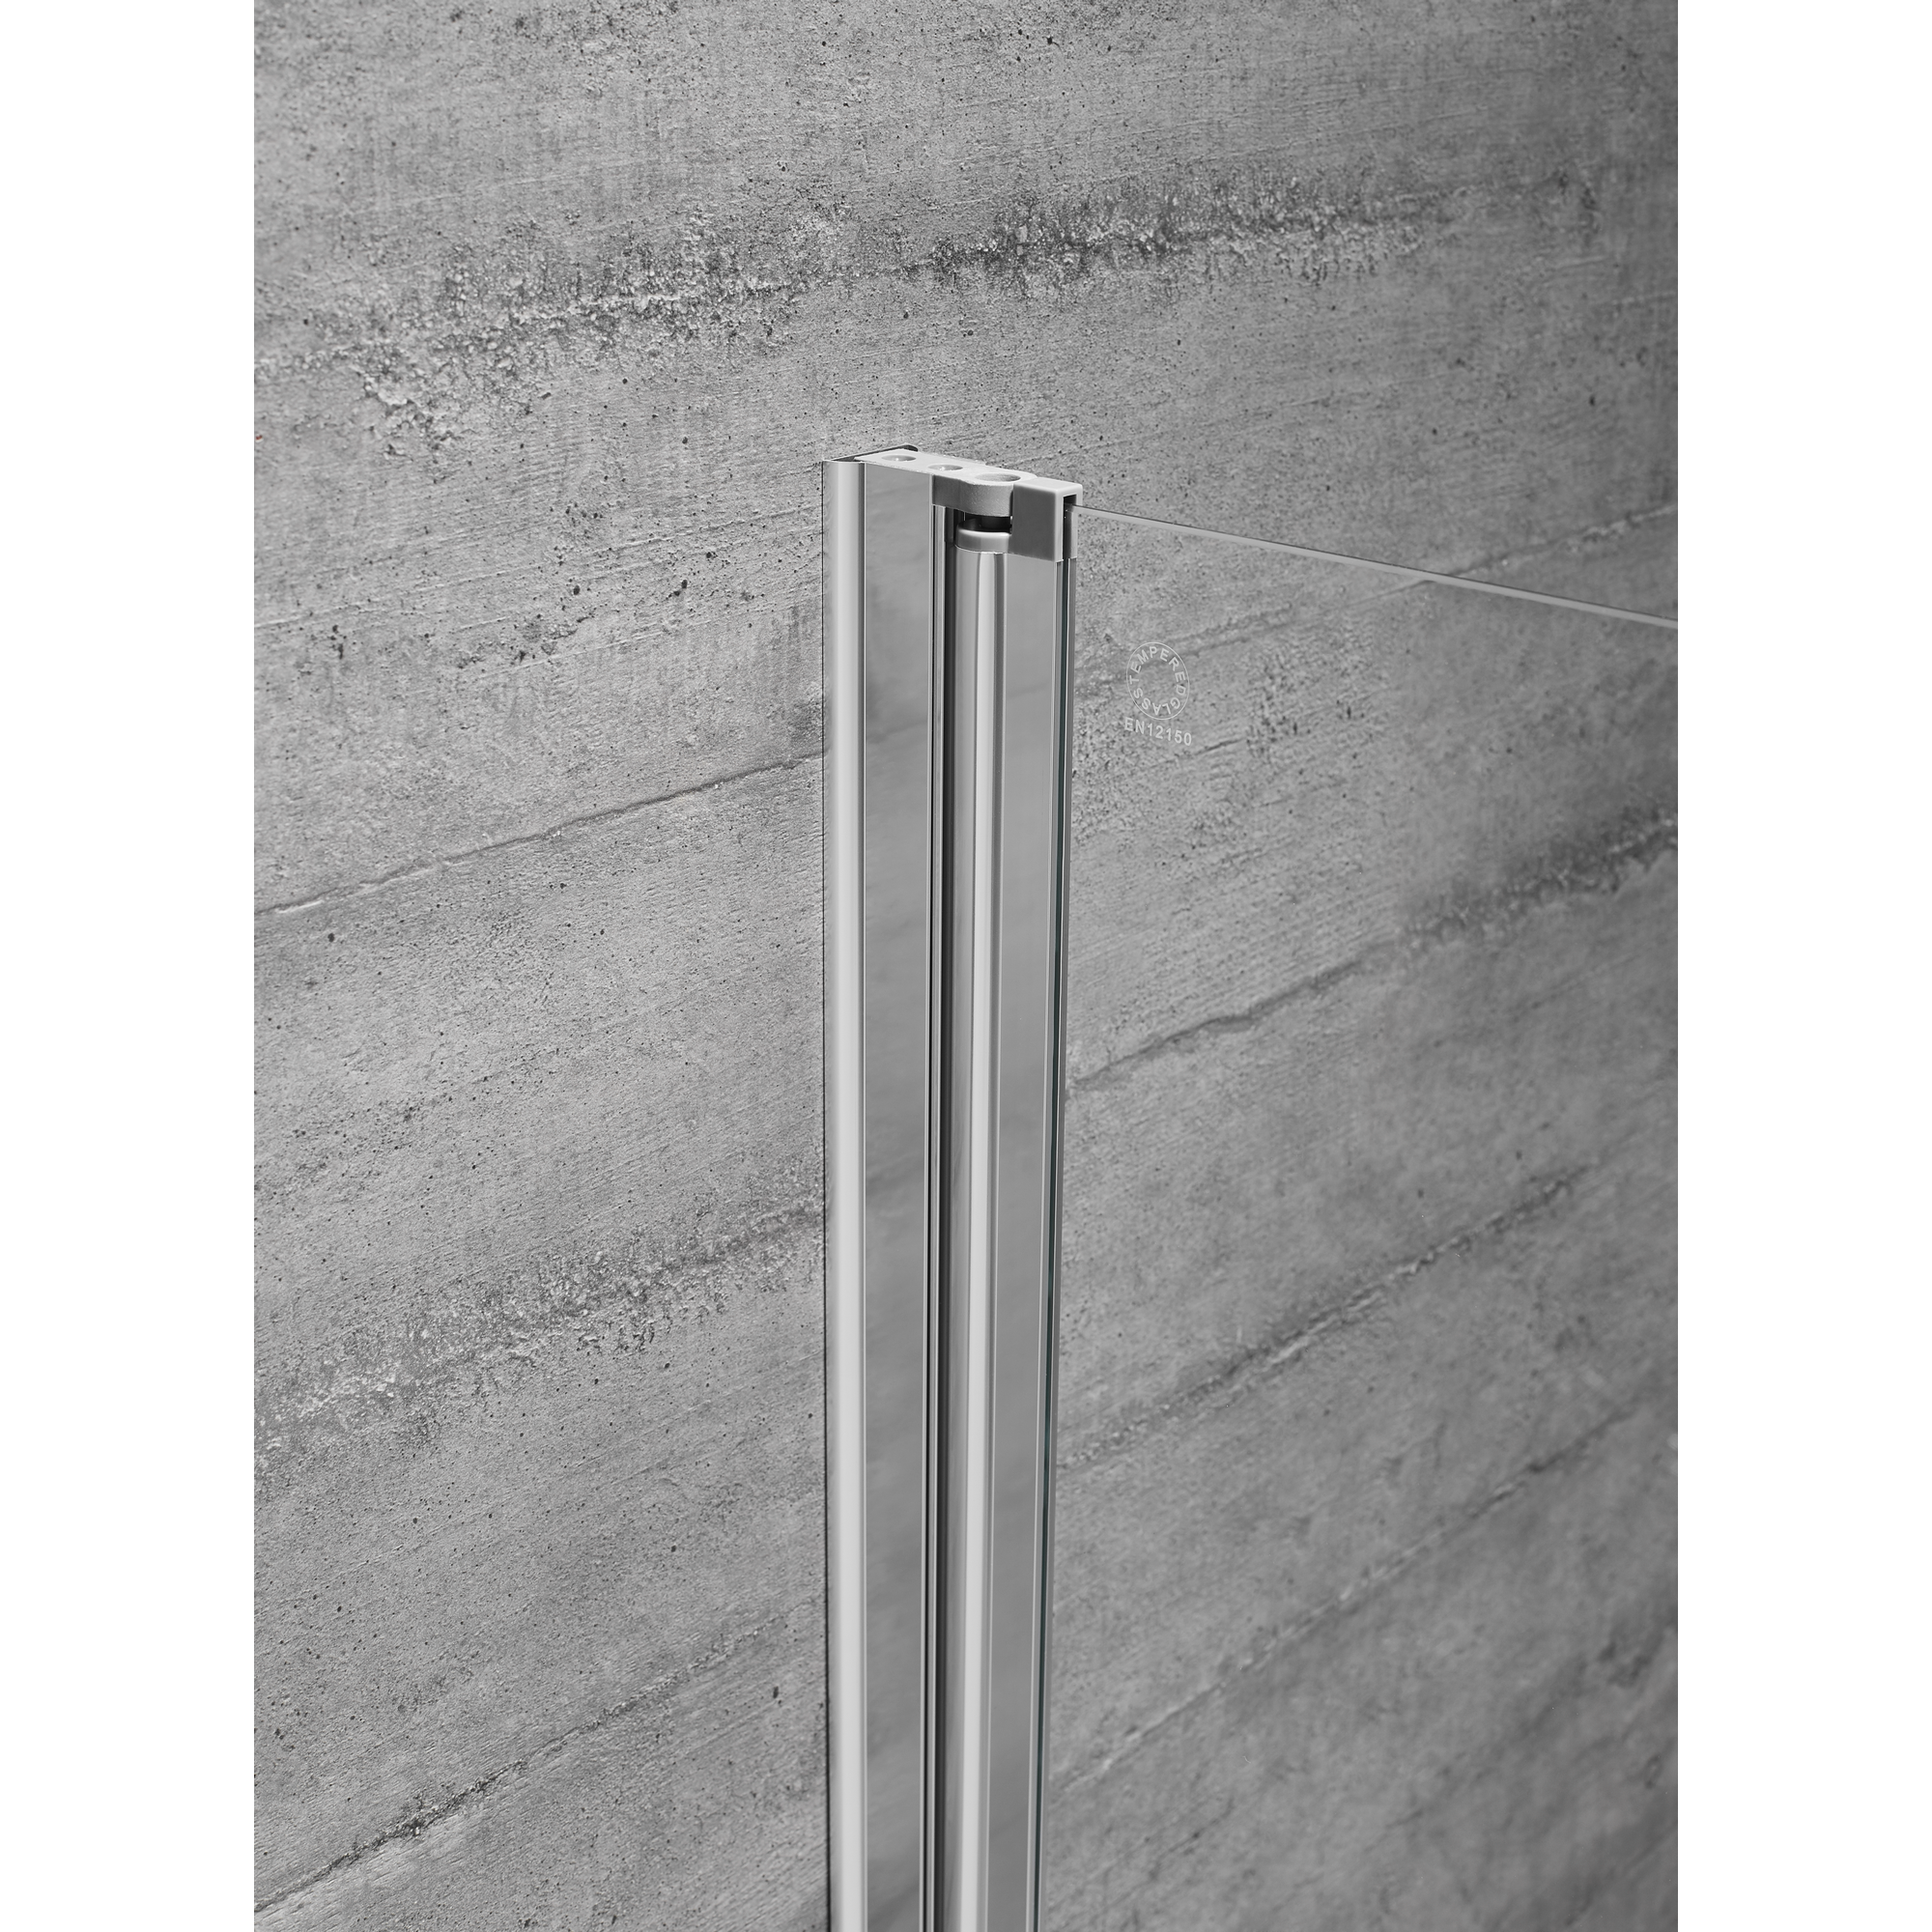 Badewannenfaltwand teilgerahmt, aluminiumfarben, 75 x 140 cm, 1-teilig + product picture